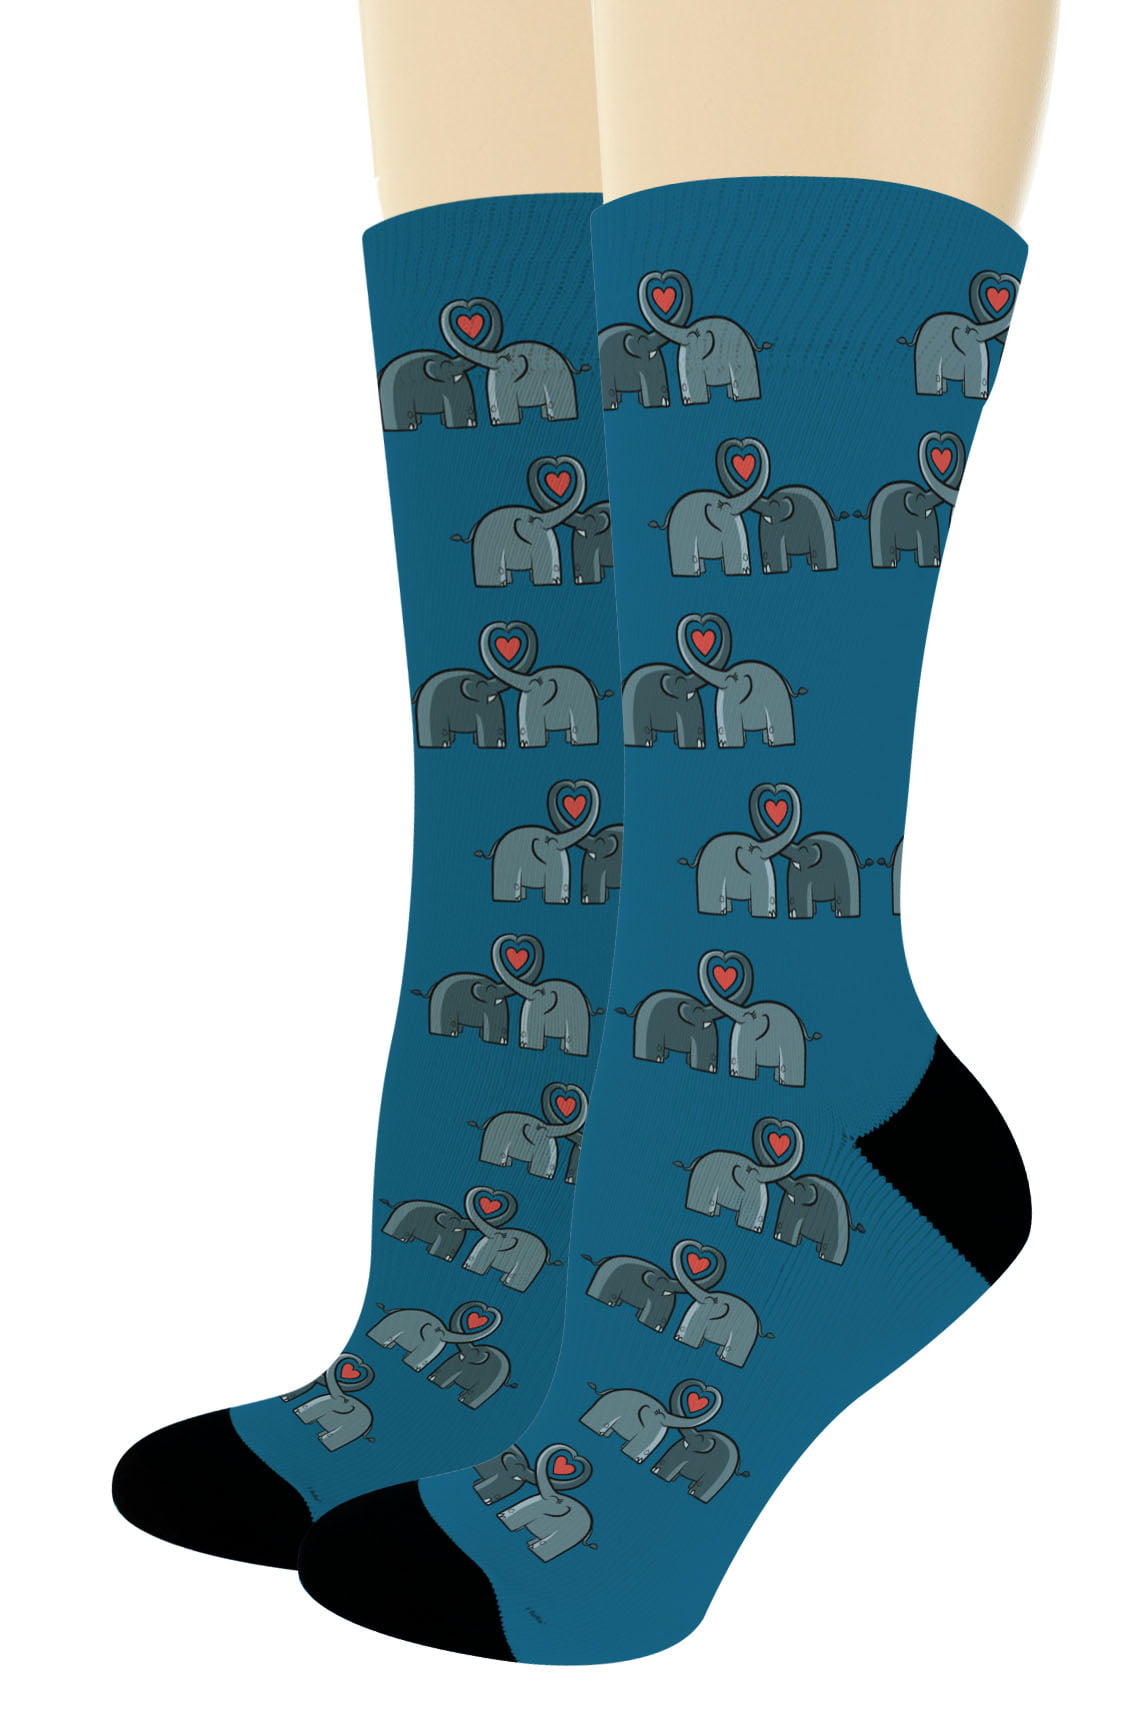 Invent Design Print Green Toe/Heel 50th Birthday Gift Black Ankle Socks 50 Present for Men Size 6-11